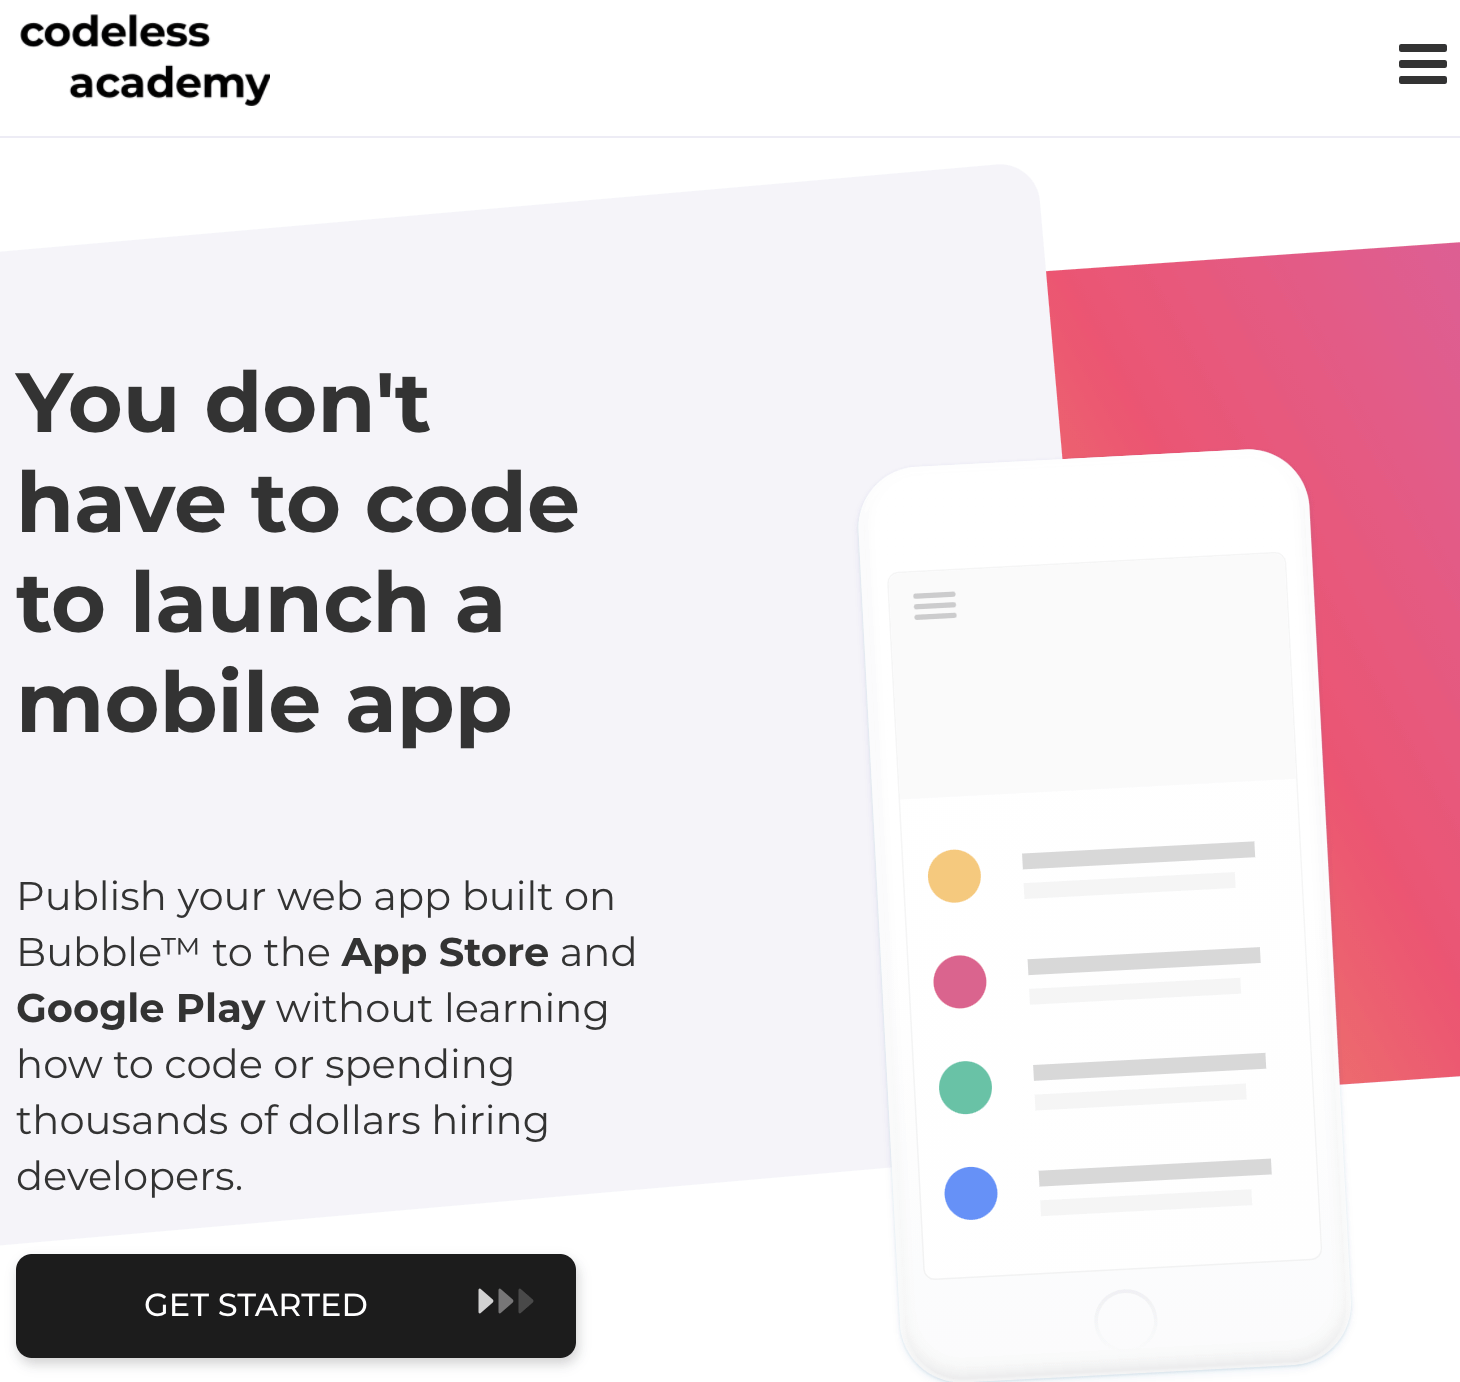 Codeless Academy